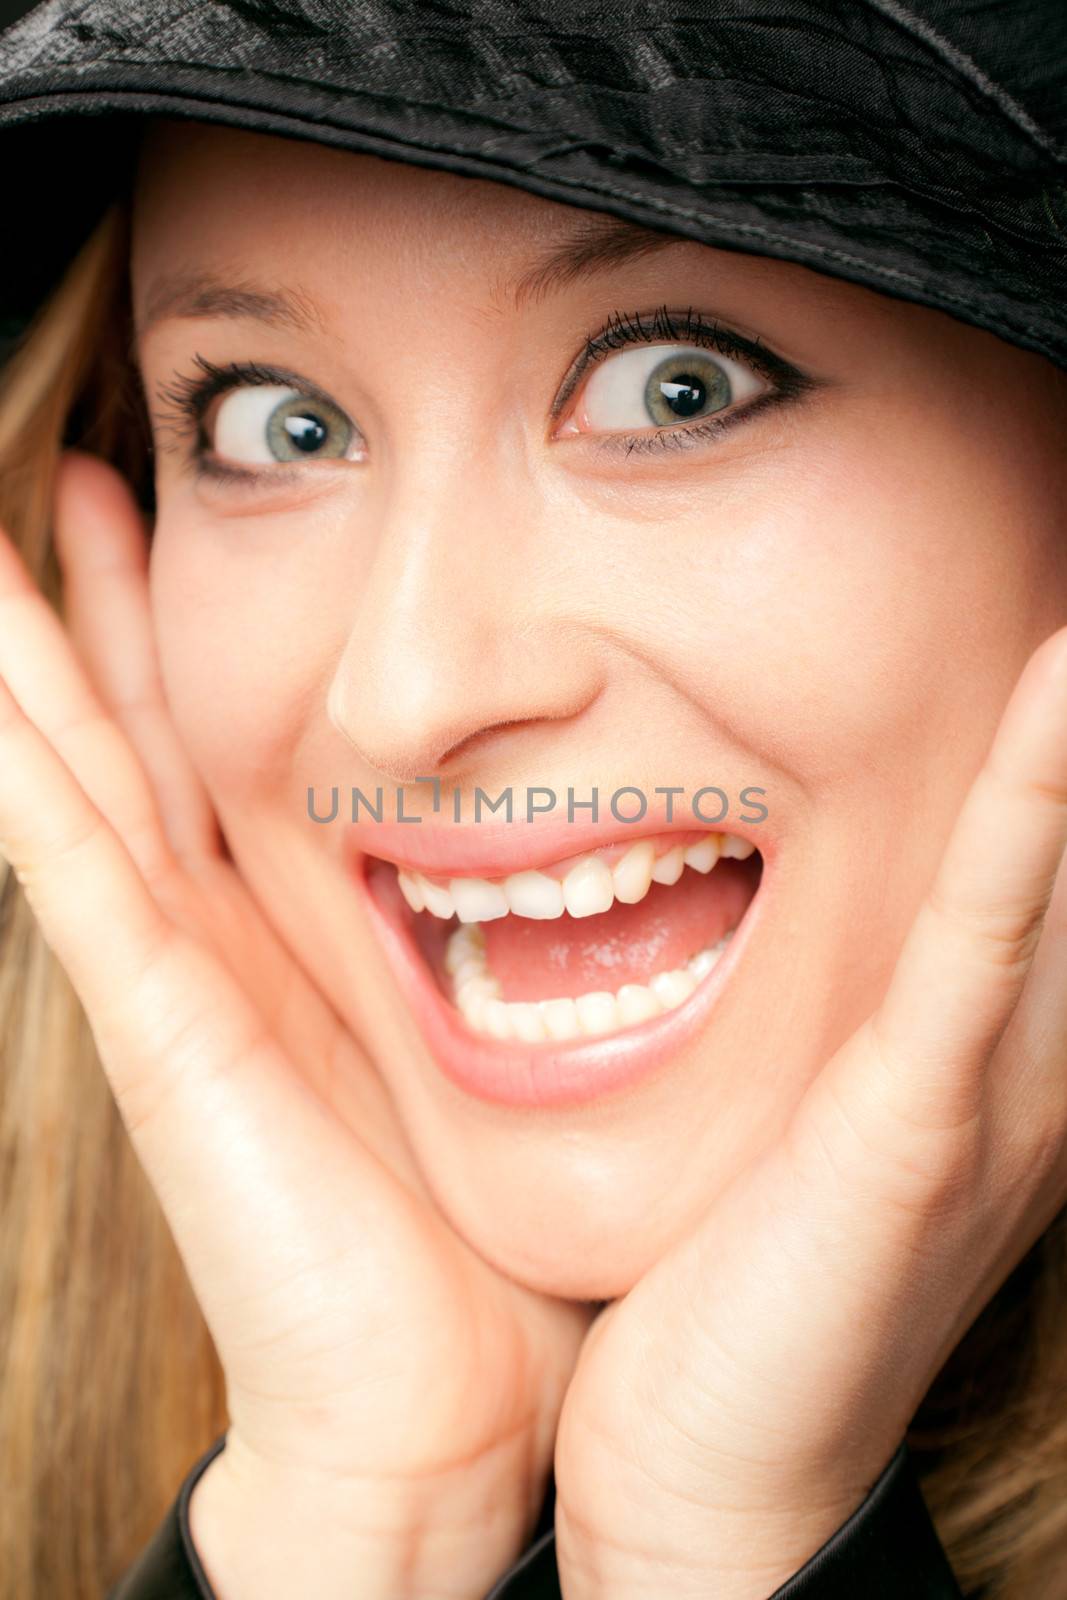 Surprised woman face scream by vilevi